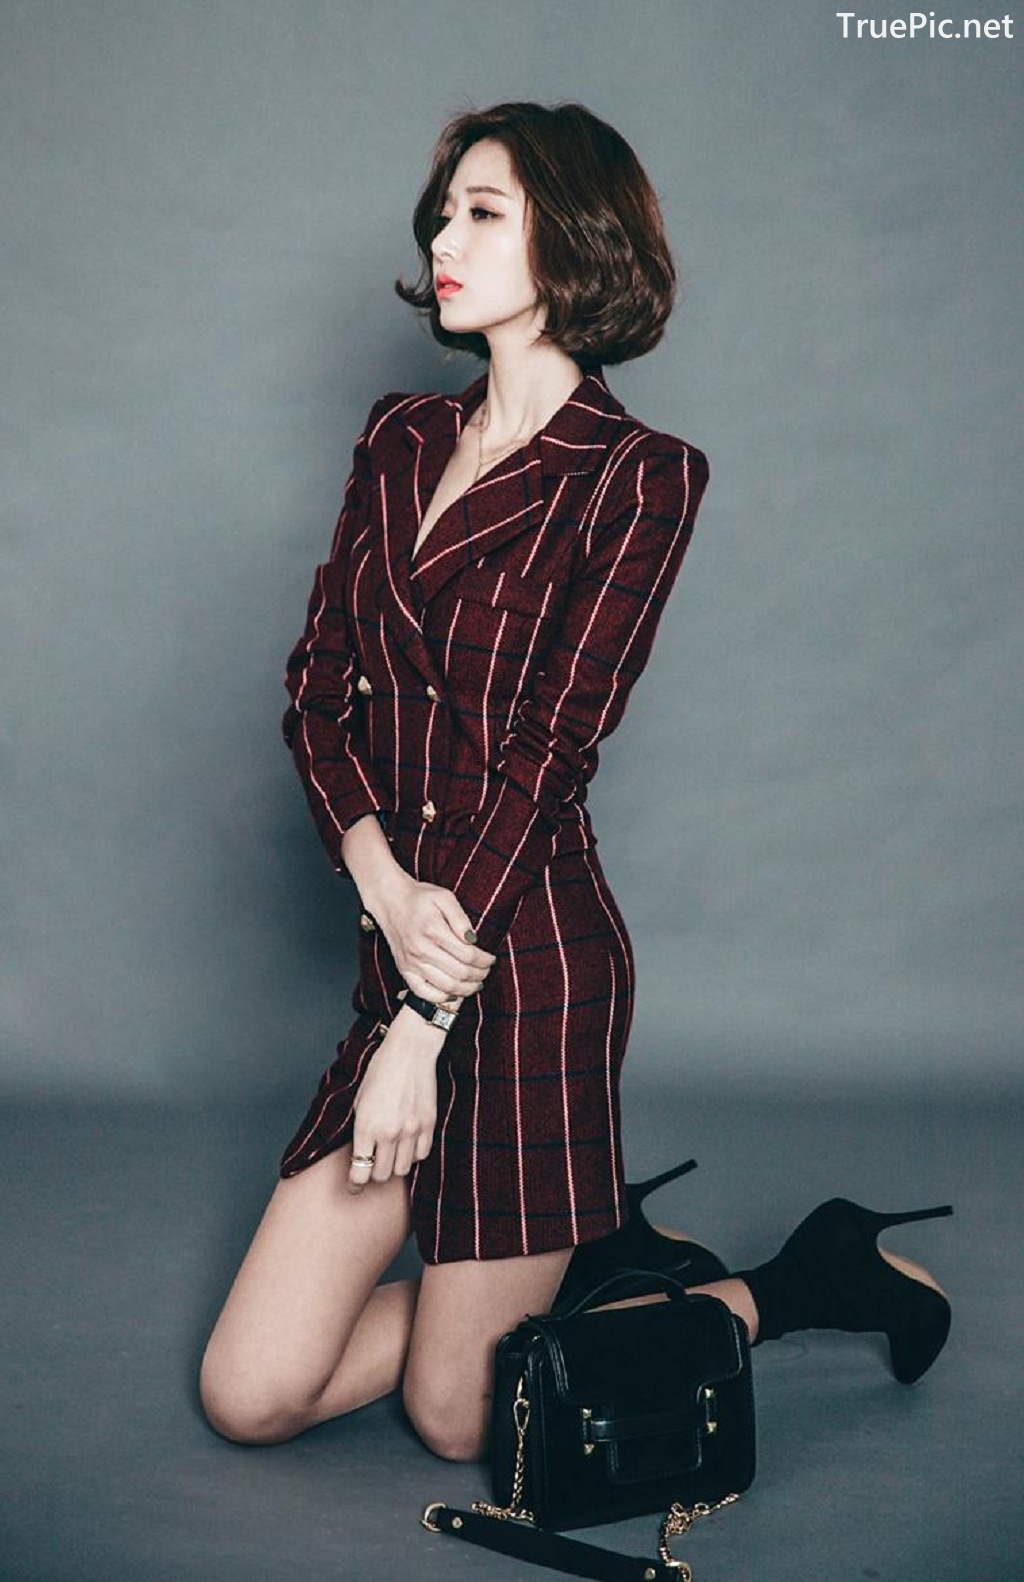 Image Ye Jin - Korean Fashion Model - Studio Photoshoot Collection - TruePic.net - Picture-46